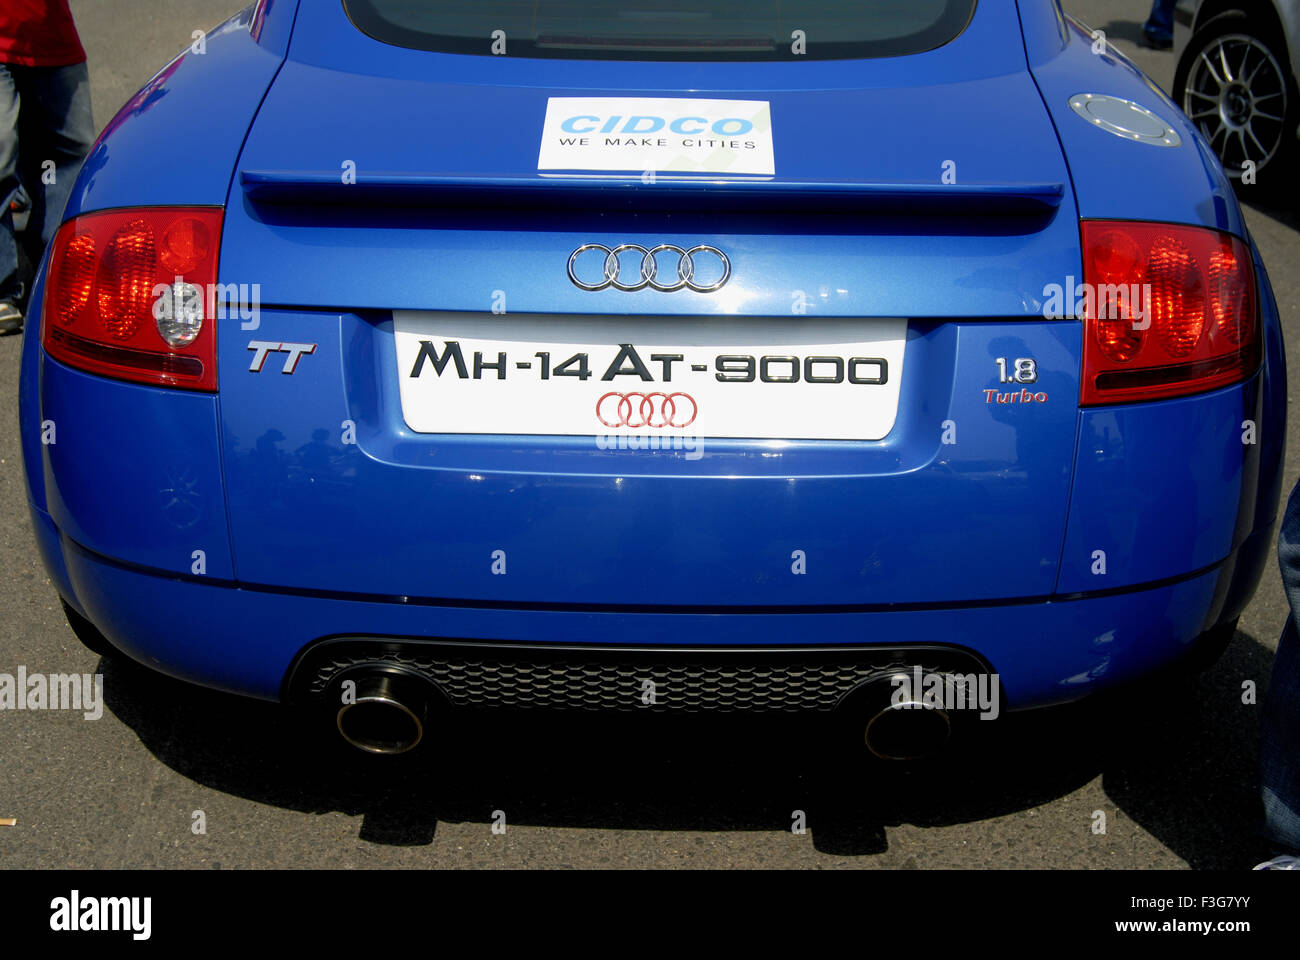 Audi blue color luxury car TT 1.8 Turbo engine Stock Photo